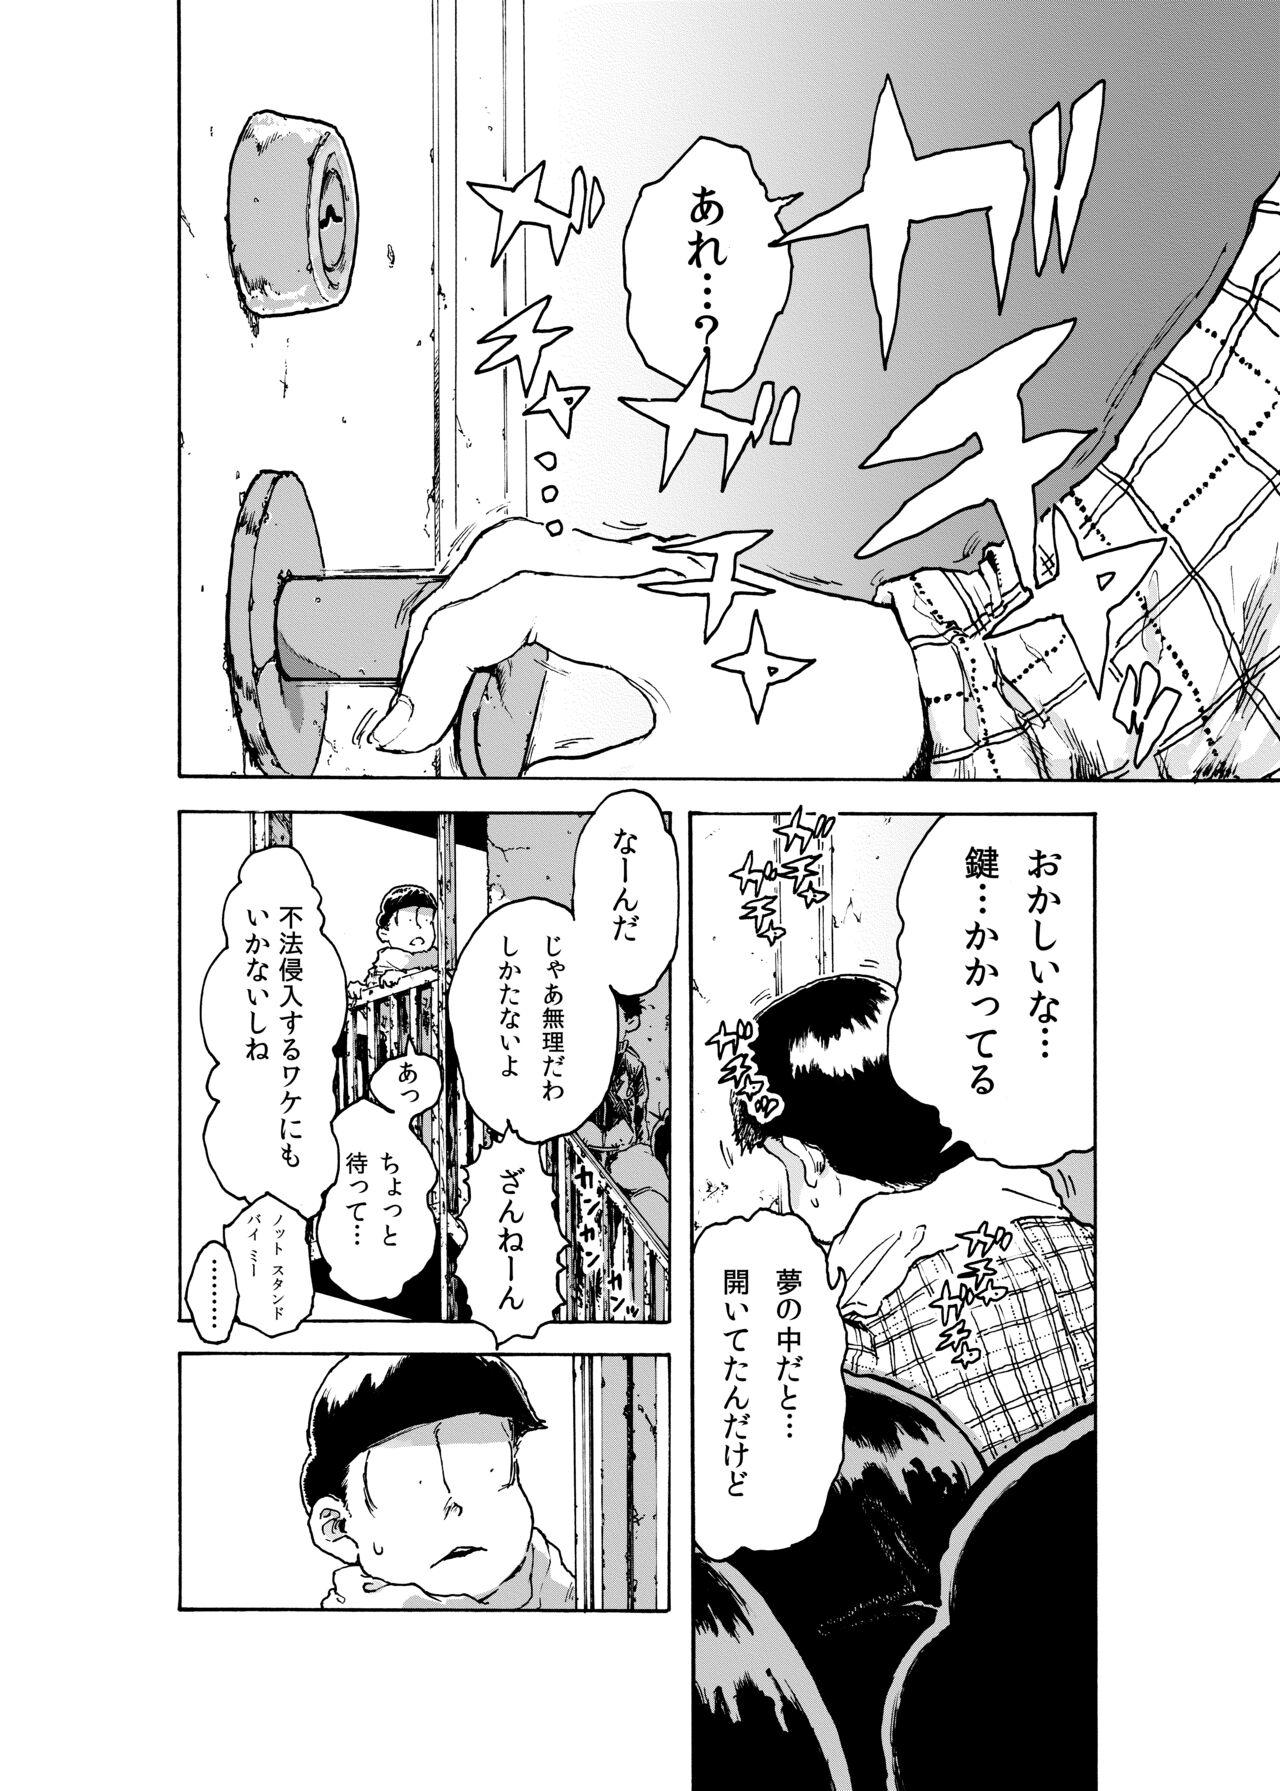 Cream WEB Sairoku 'BUT WHO IS THE DREAMRE?' - Osomatsu san Pendeja - Page 2